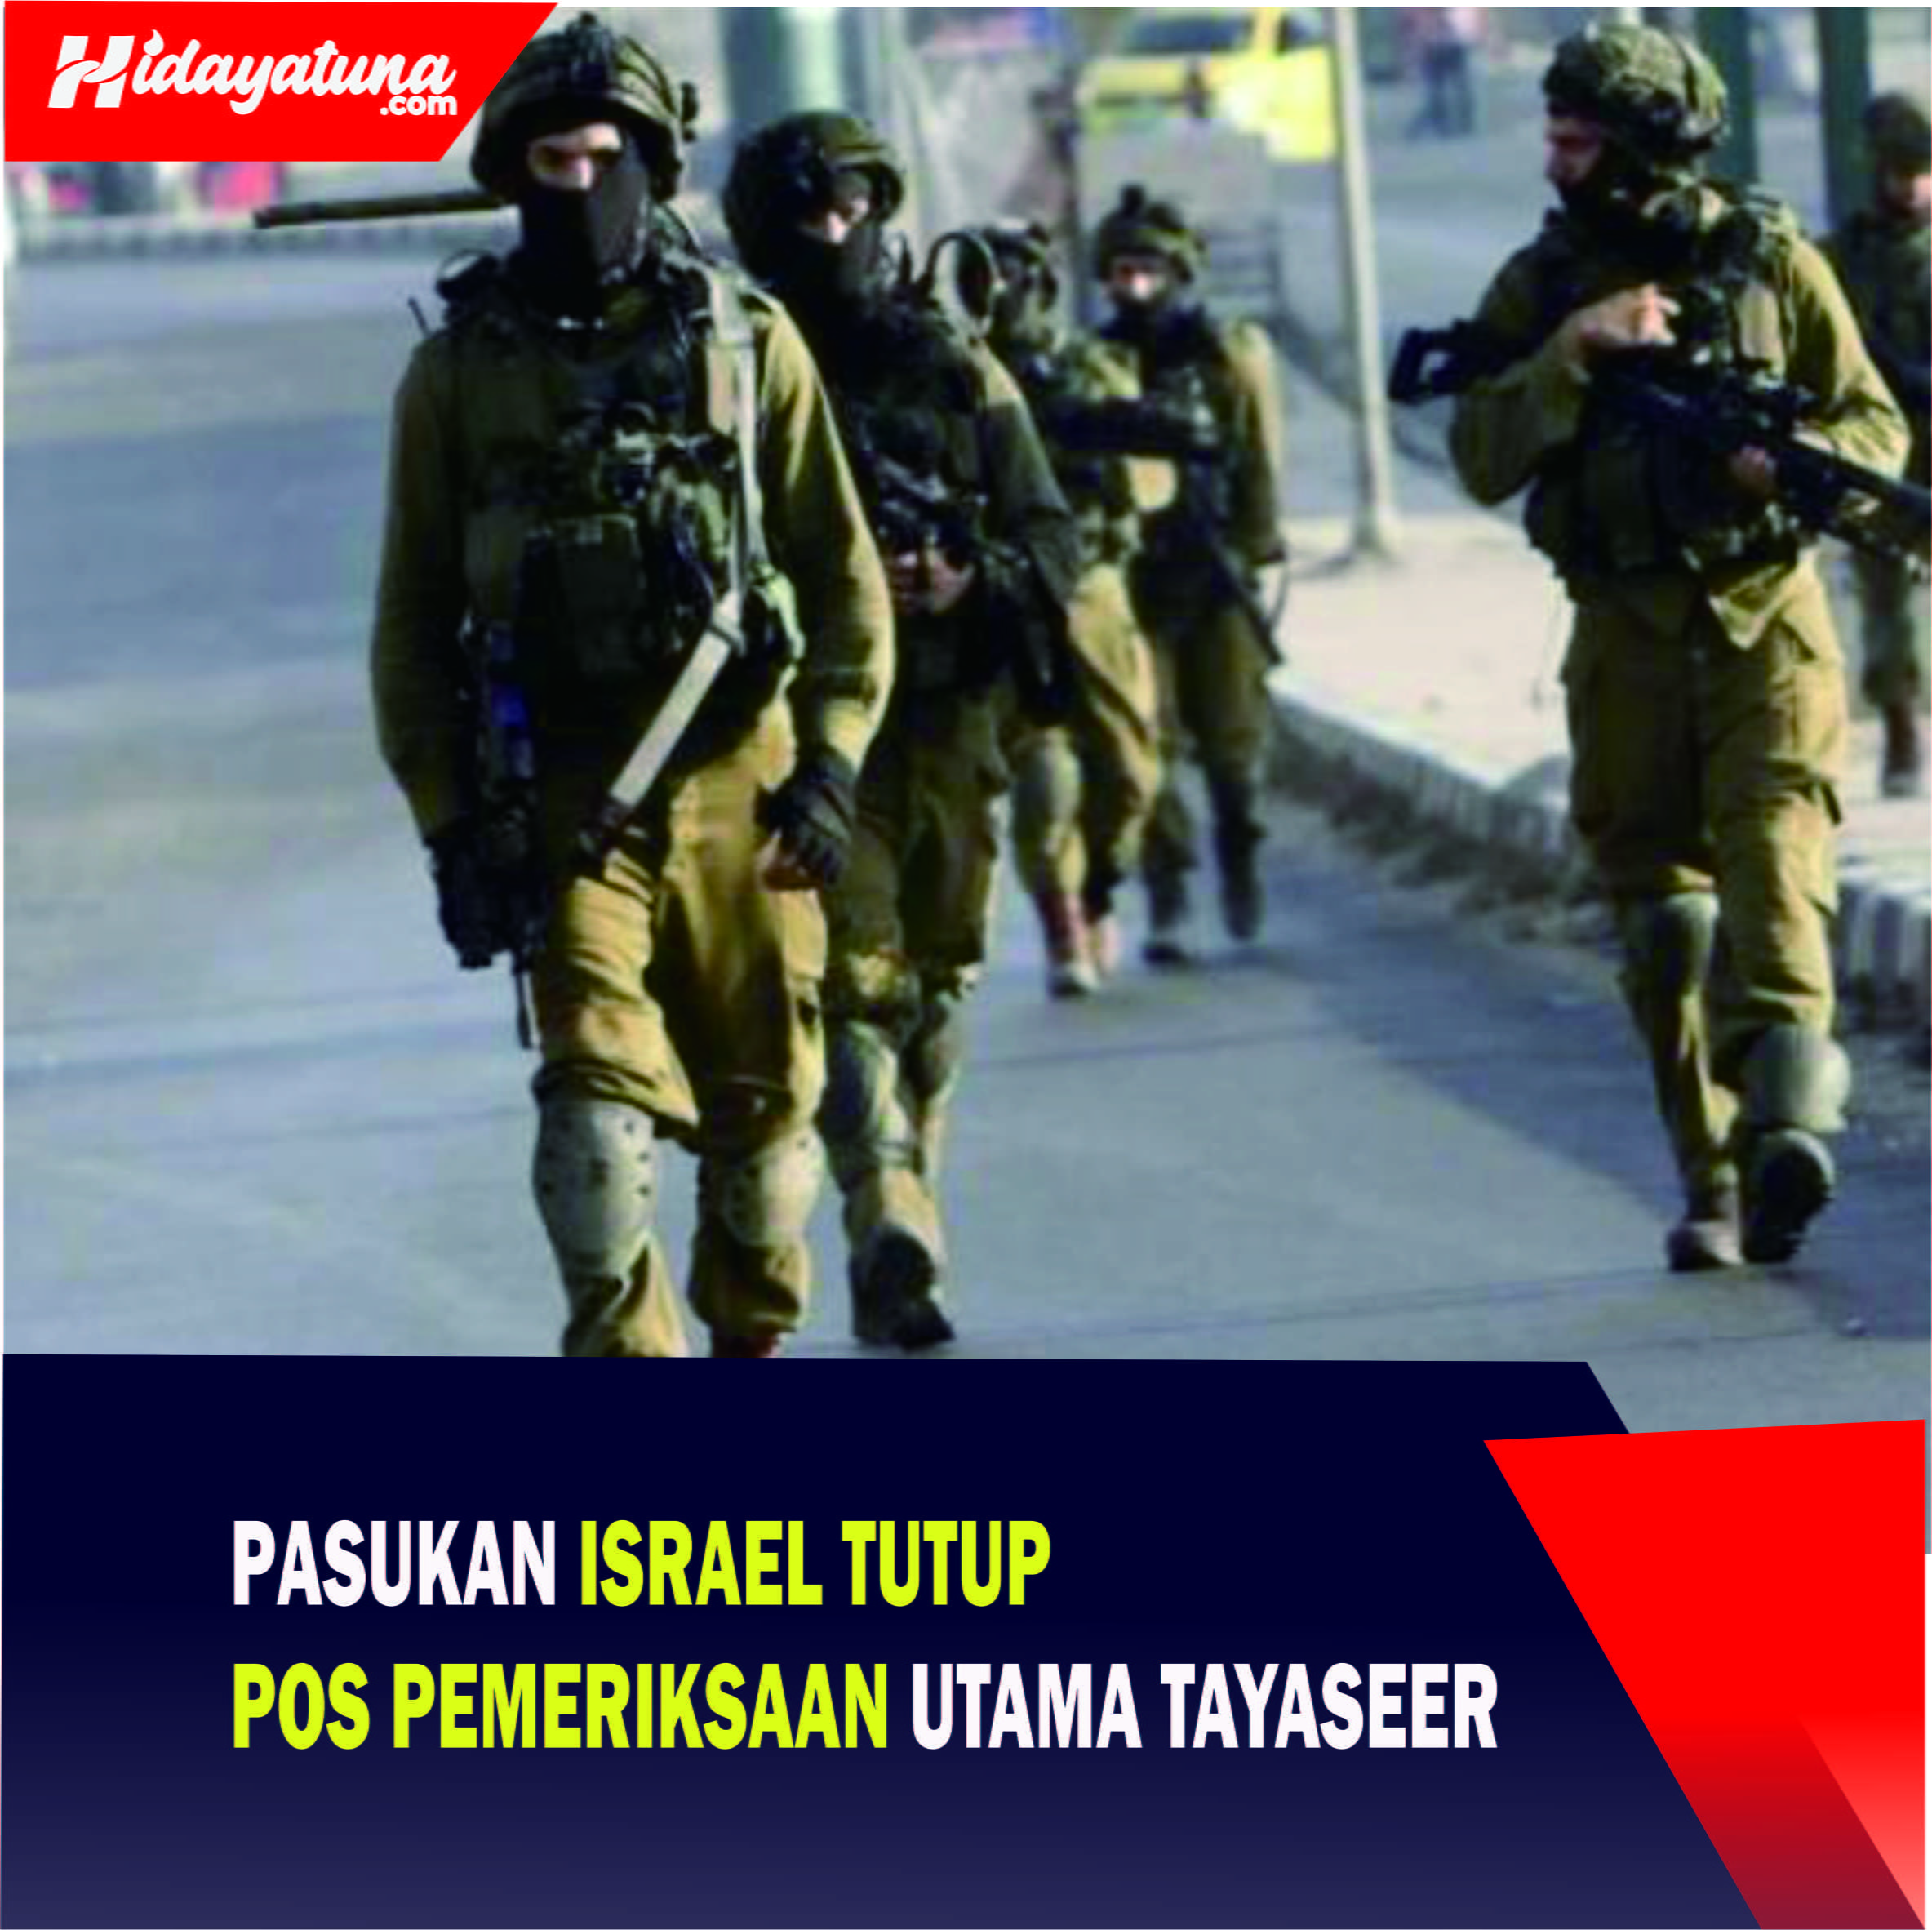  Pasukan Israel Tutup Pos Pemeriksaan Utama Tayaseer